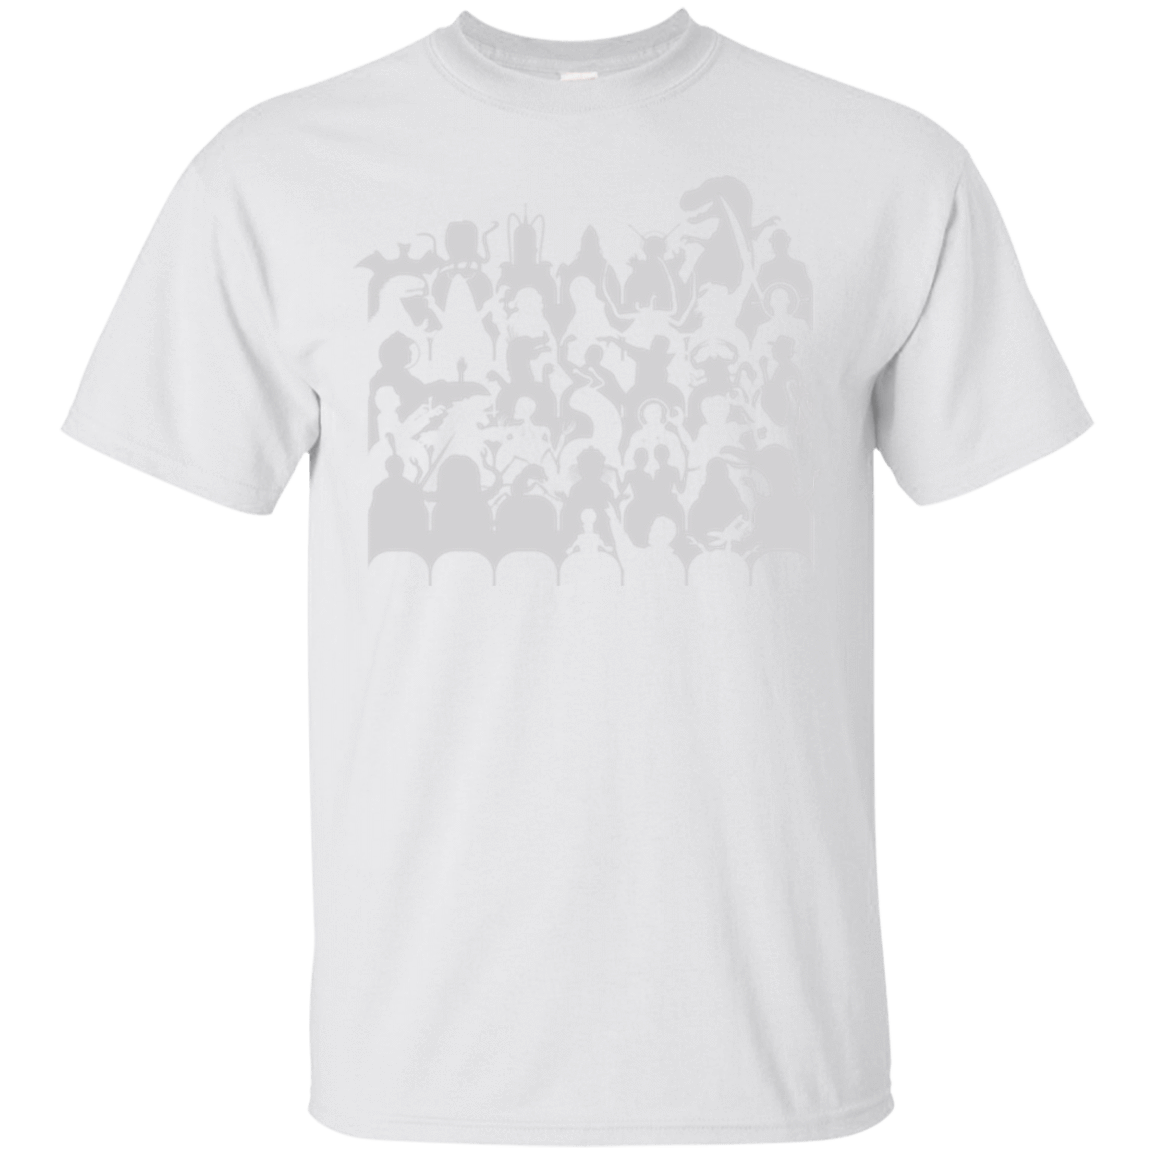 T-Shirts White / Small MST3K T-Shirt